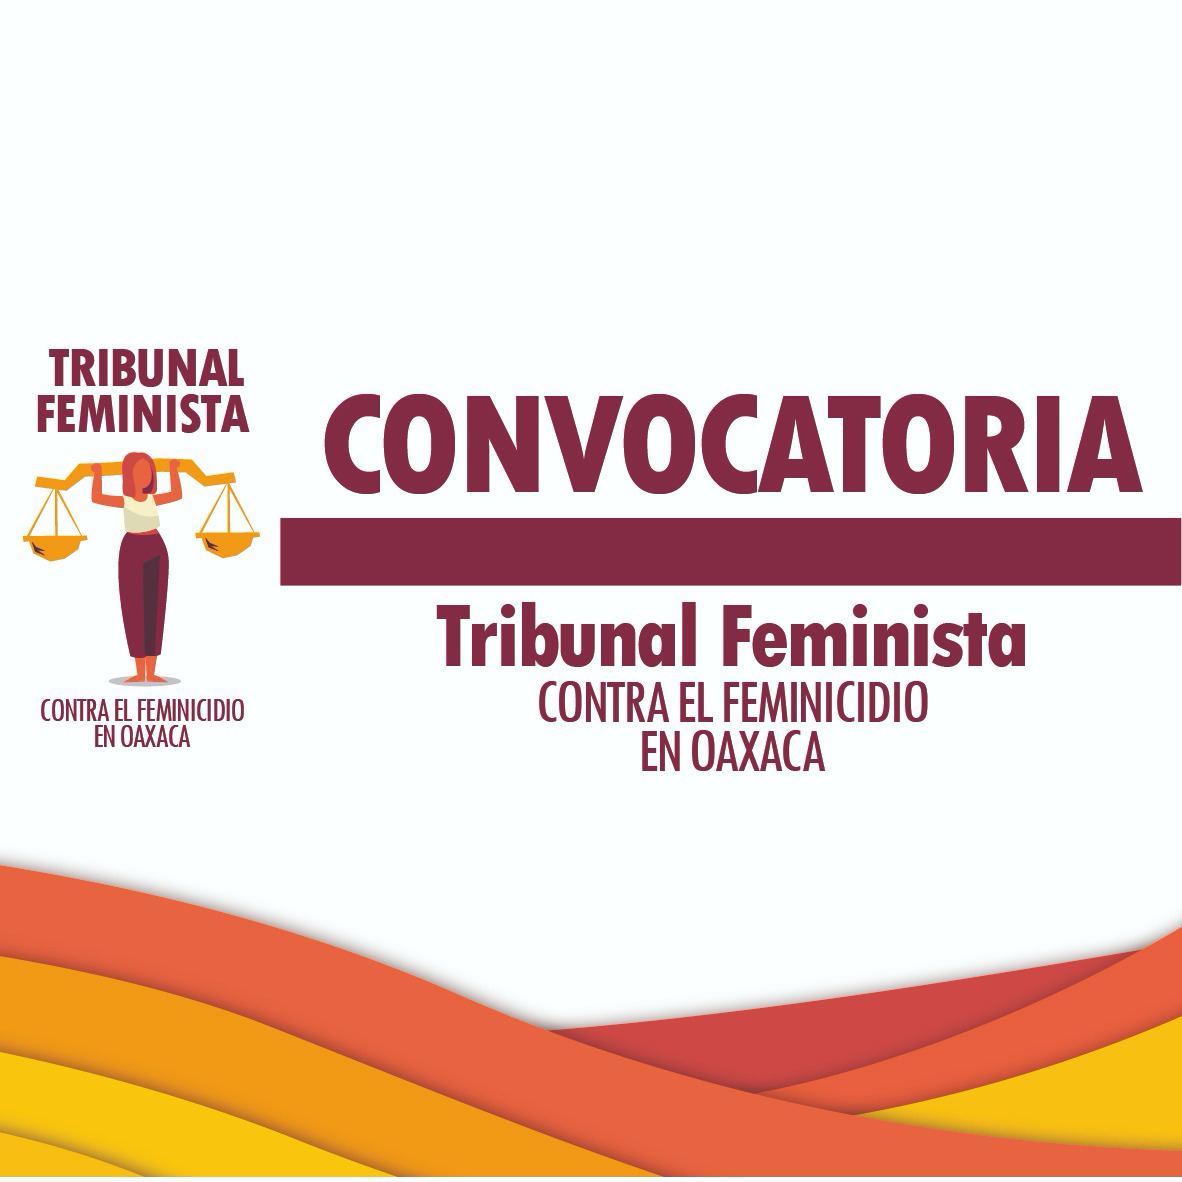 Convocan al Tribunal Feminista contra la Violencia Feminicida en Oaxaca